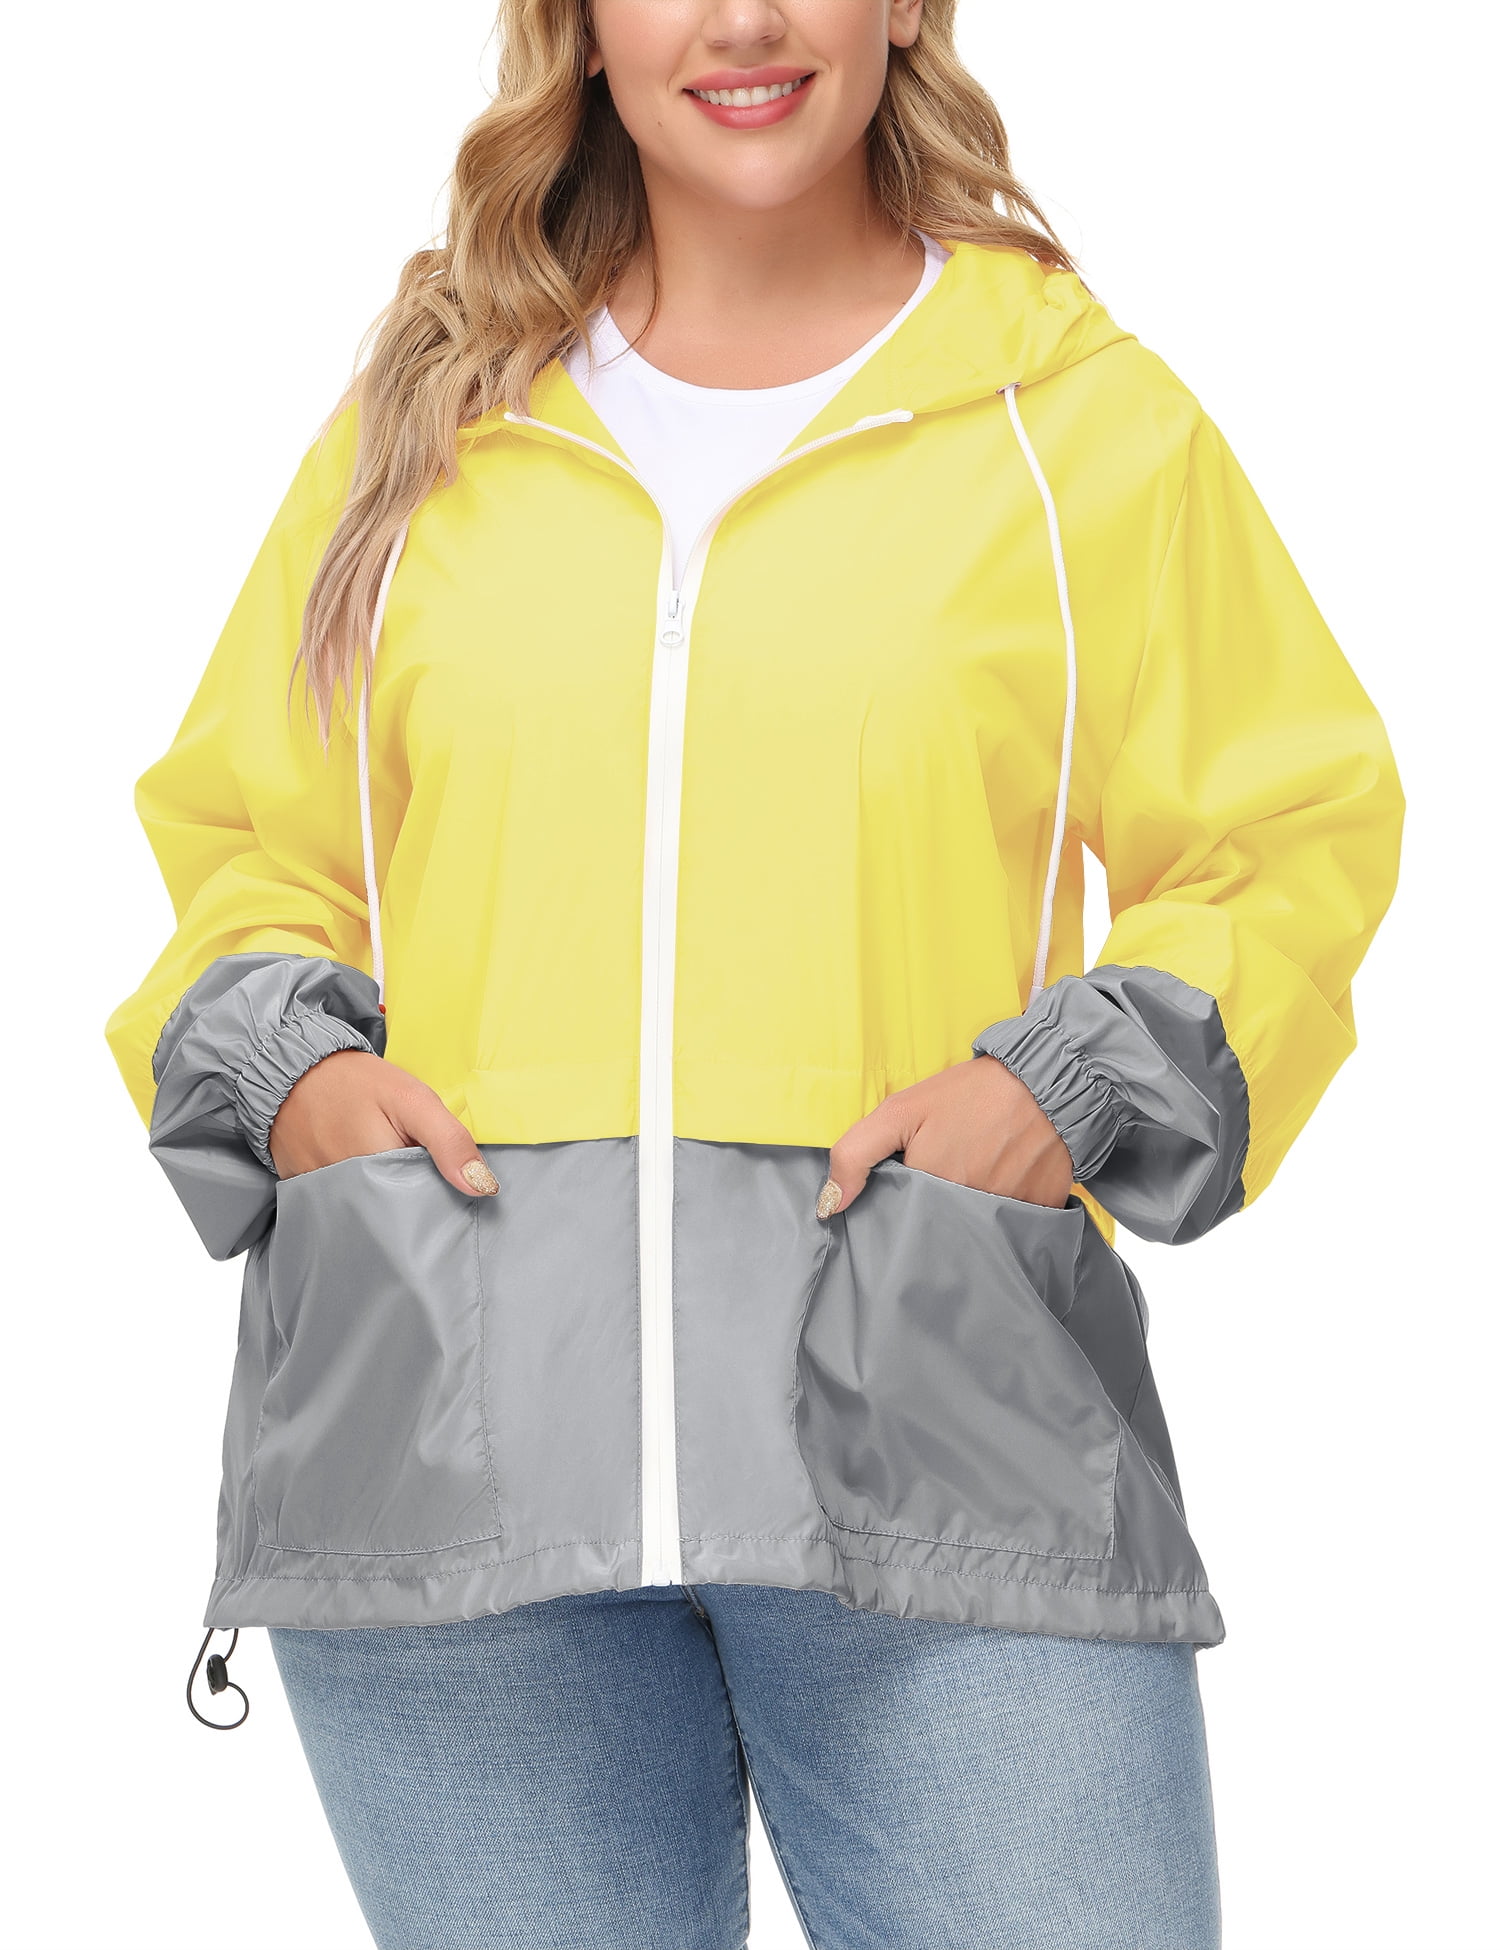 Avoogue Women's Long Raincoat with Hood Outdoor Lightweight Windbreaker Rain Jacket Waterproof 